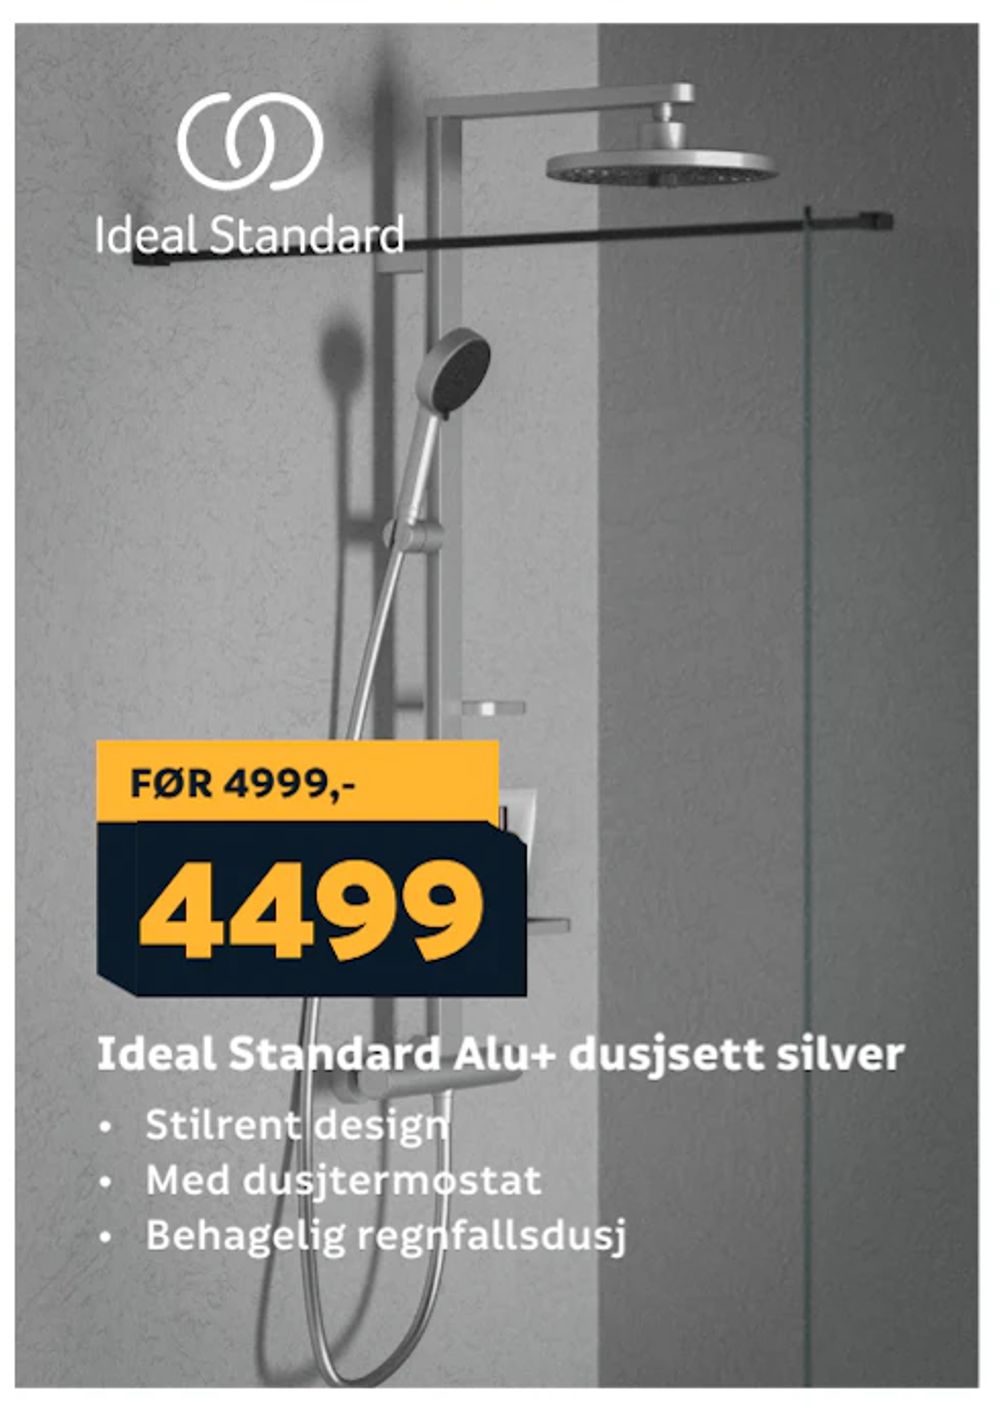 Tilbud på Ideal Standard Alu+ dusjsett silver fra Megaflis til 4 499 kr